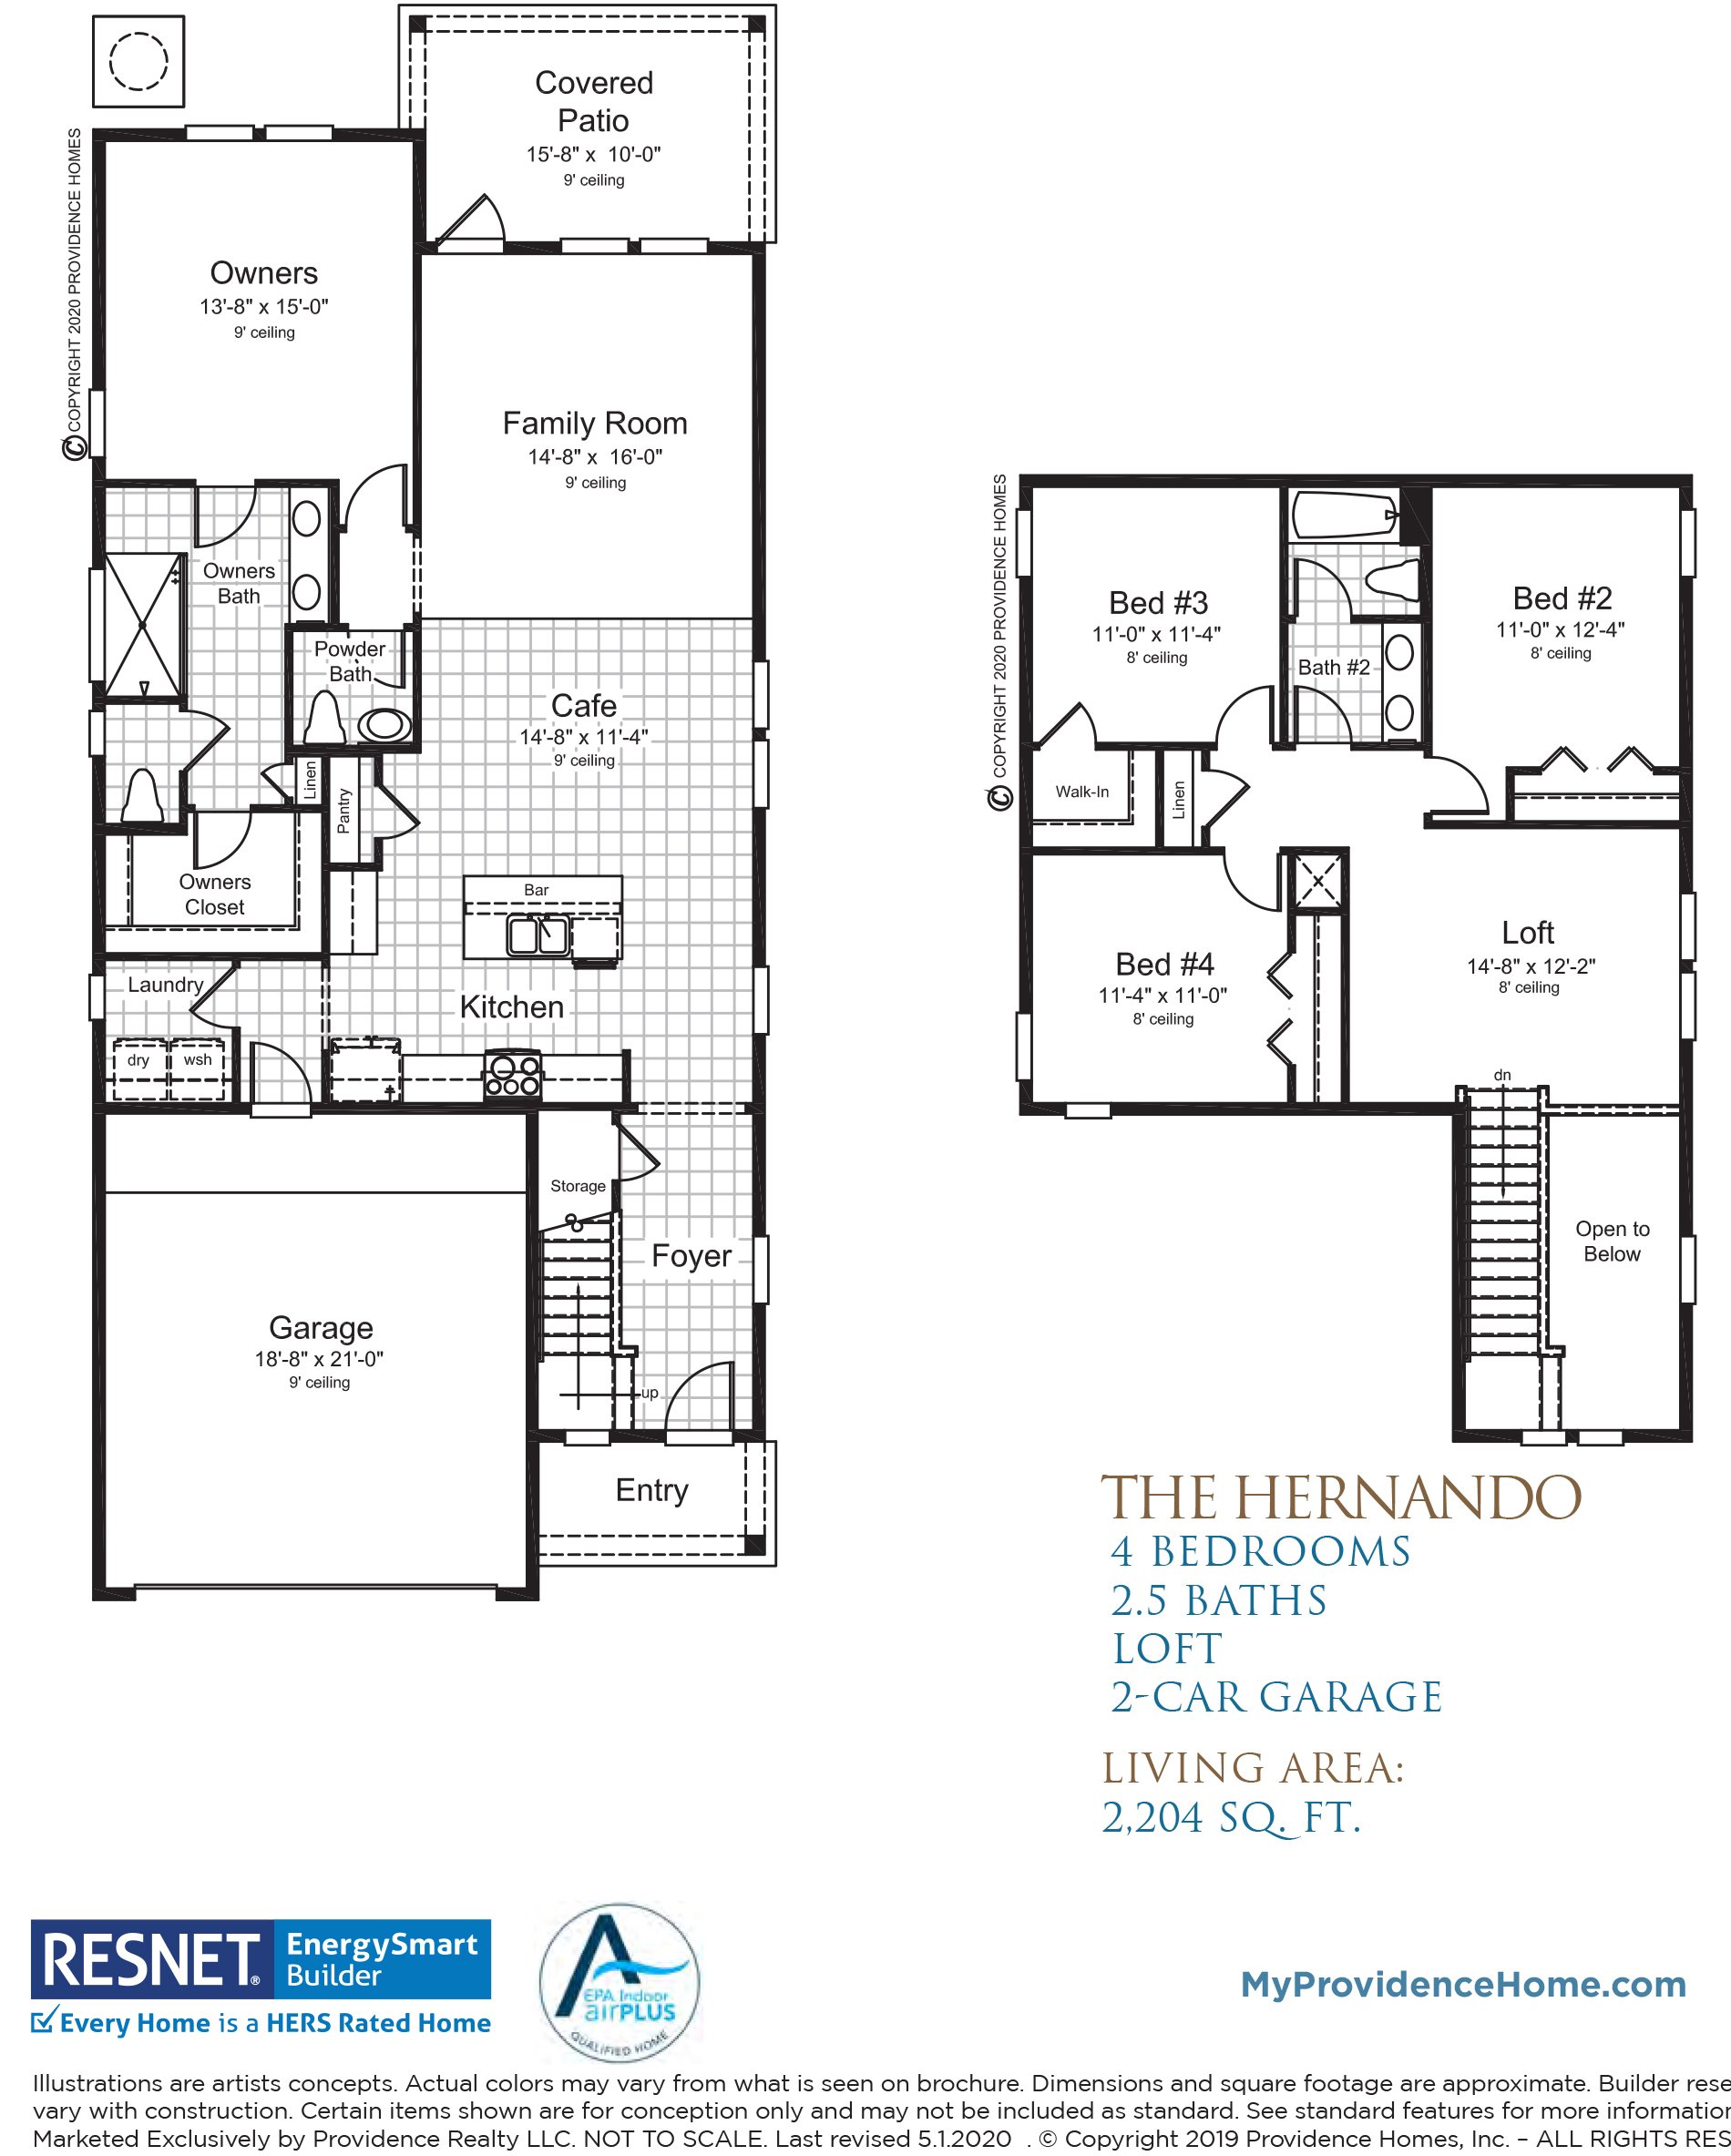 The Hernando floorplan